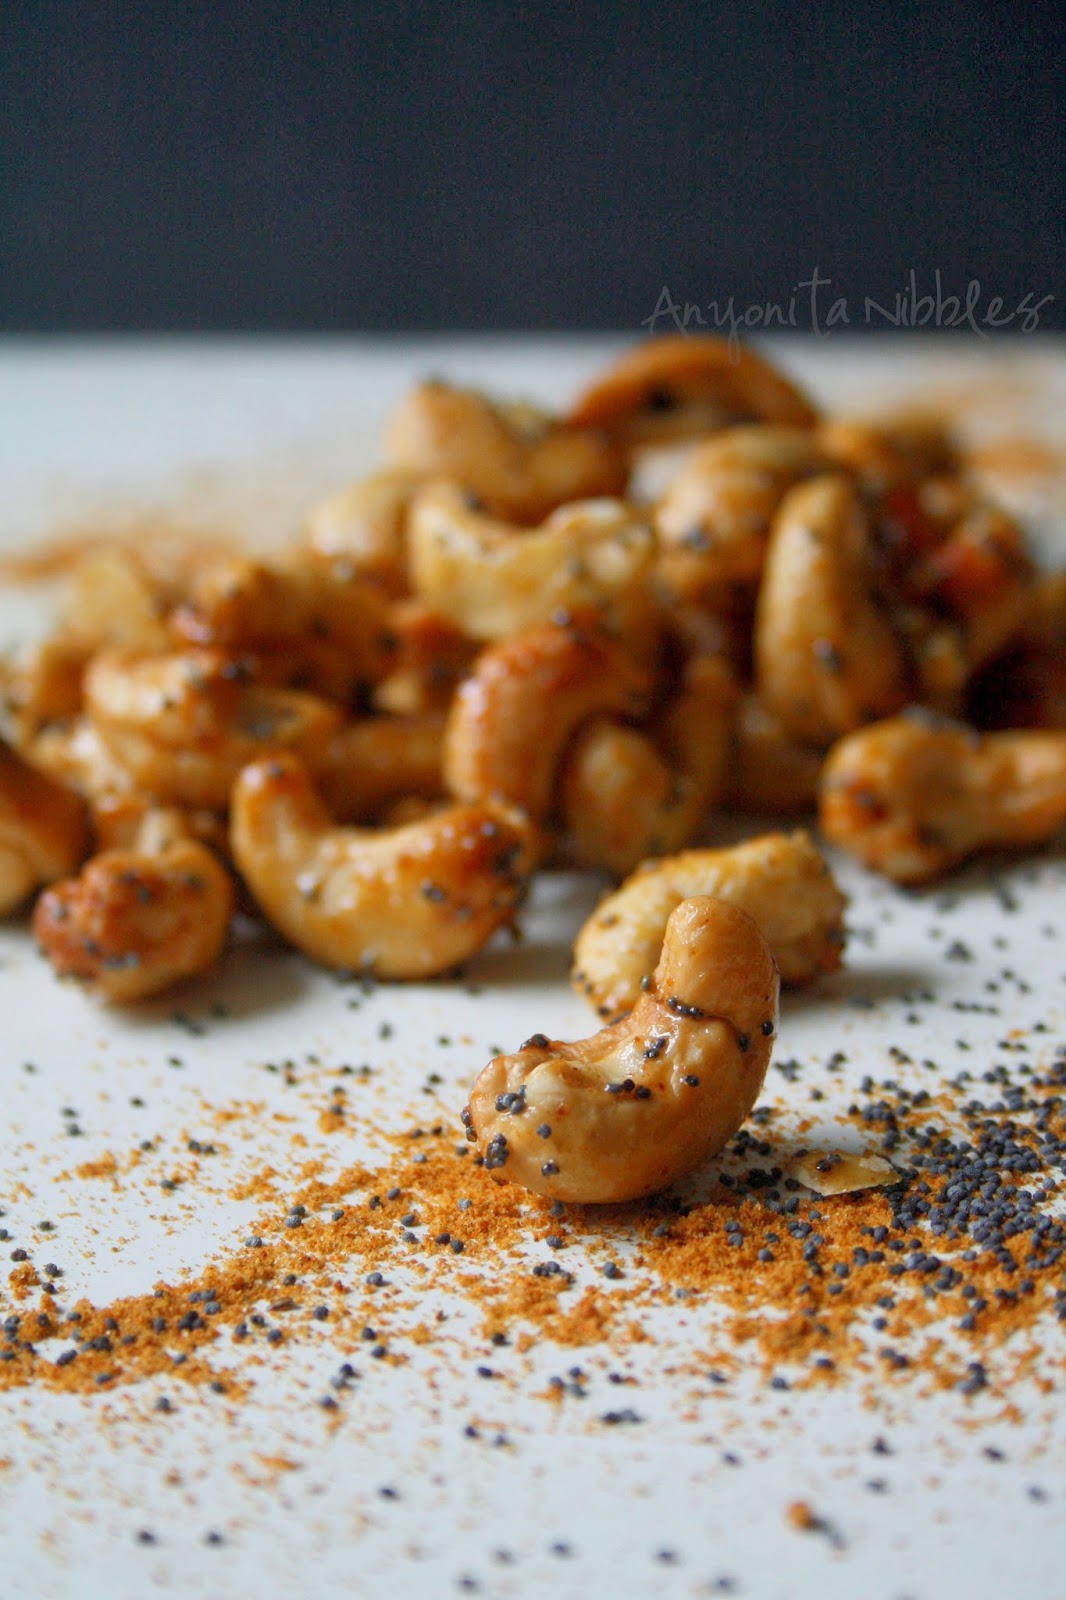 Anyonita Nibbles | Gluten-Free Recipes : Gluten Free Curried Cashews ...